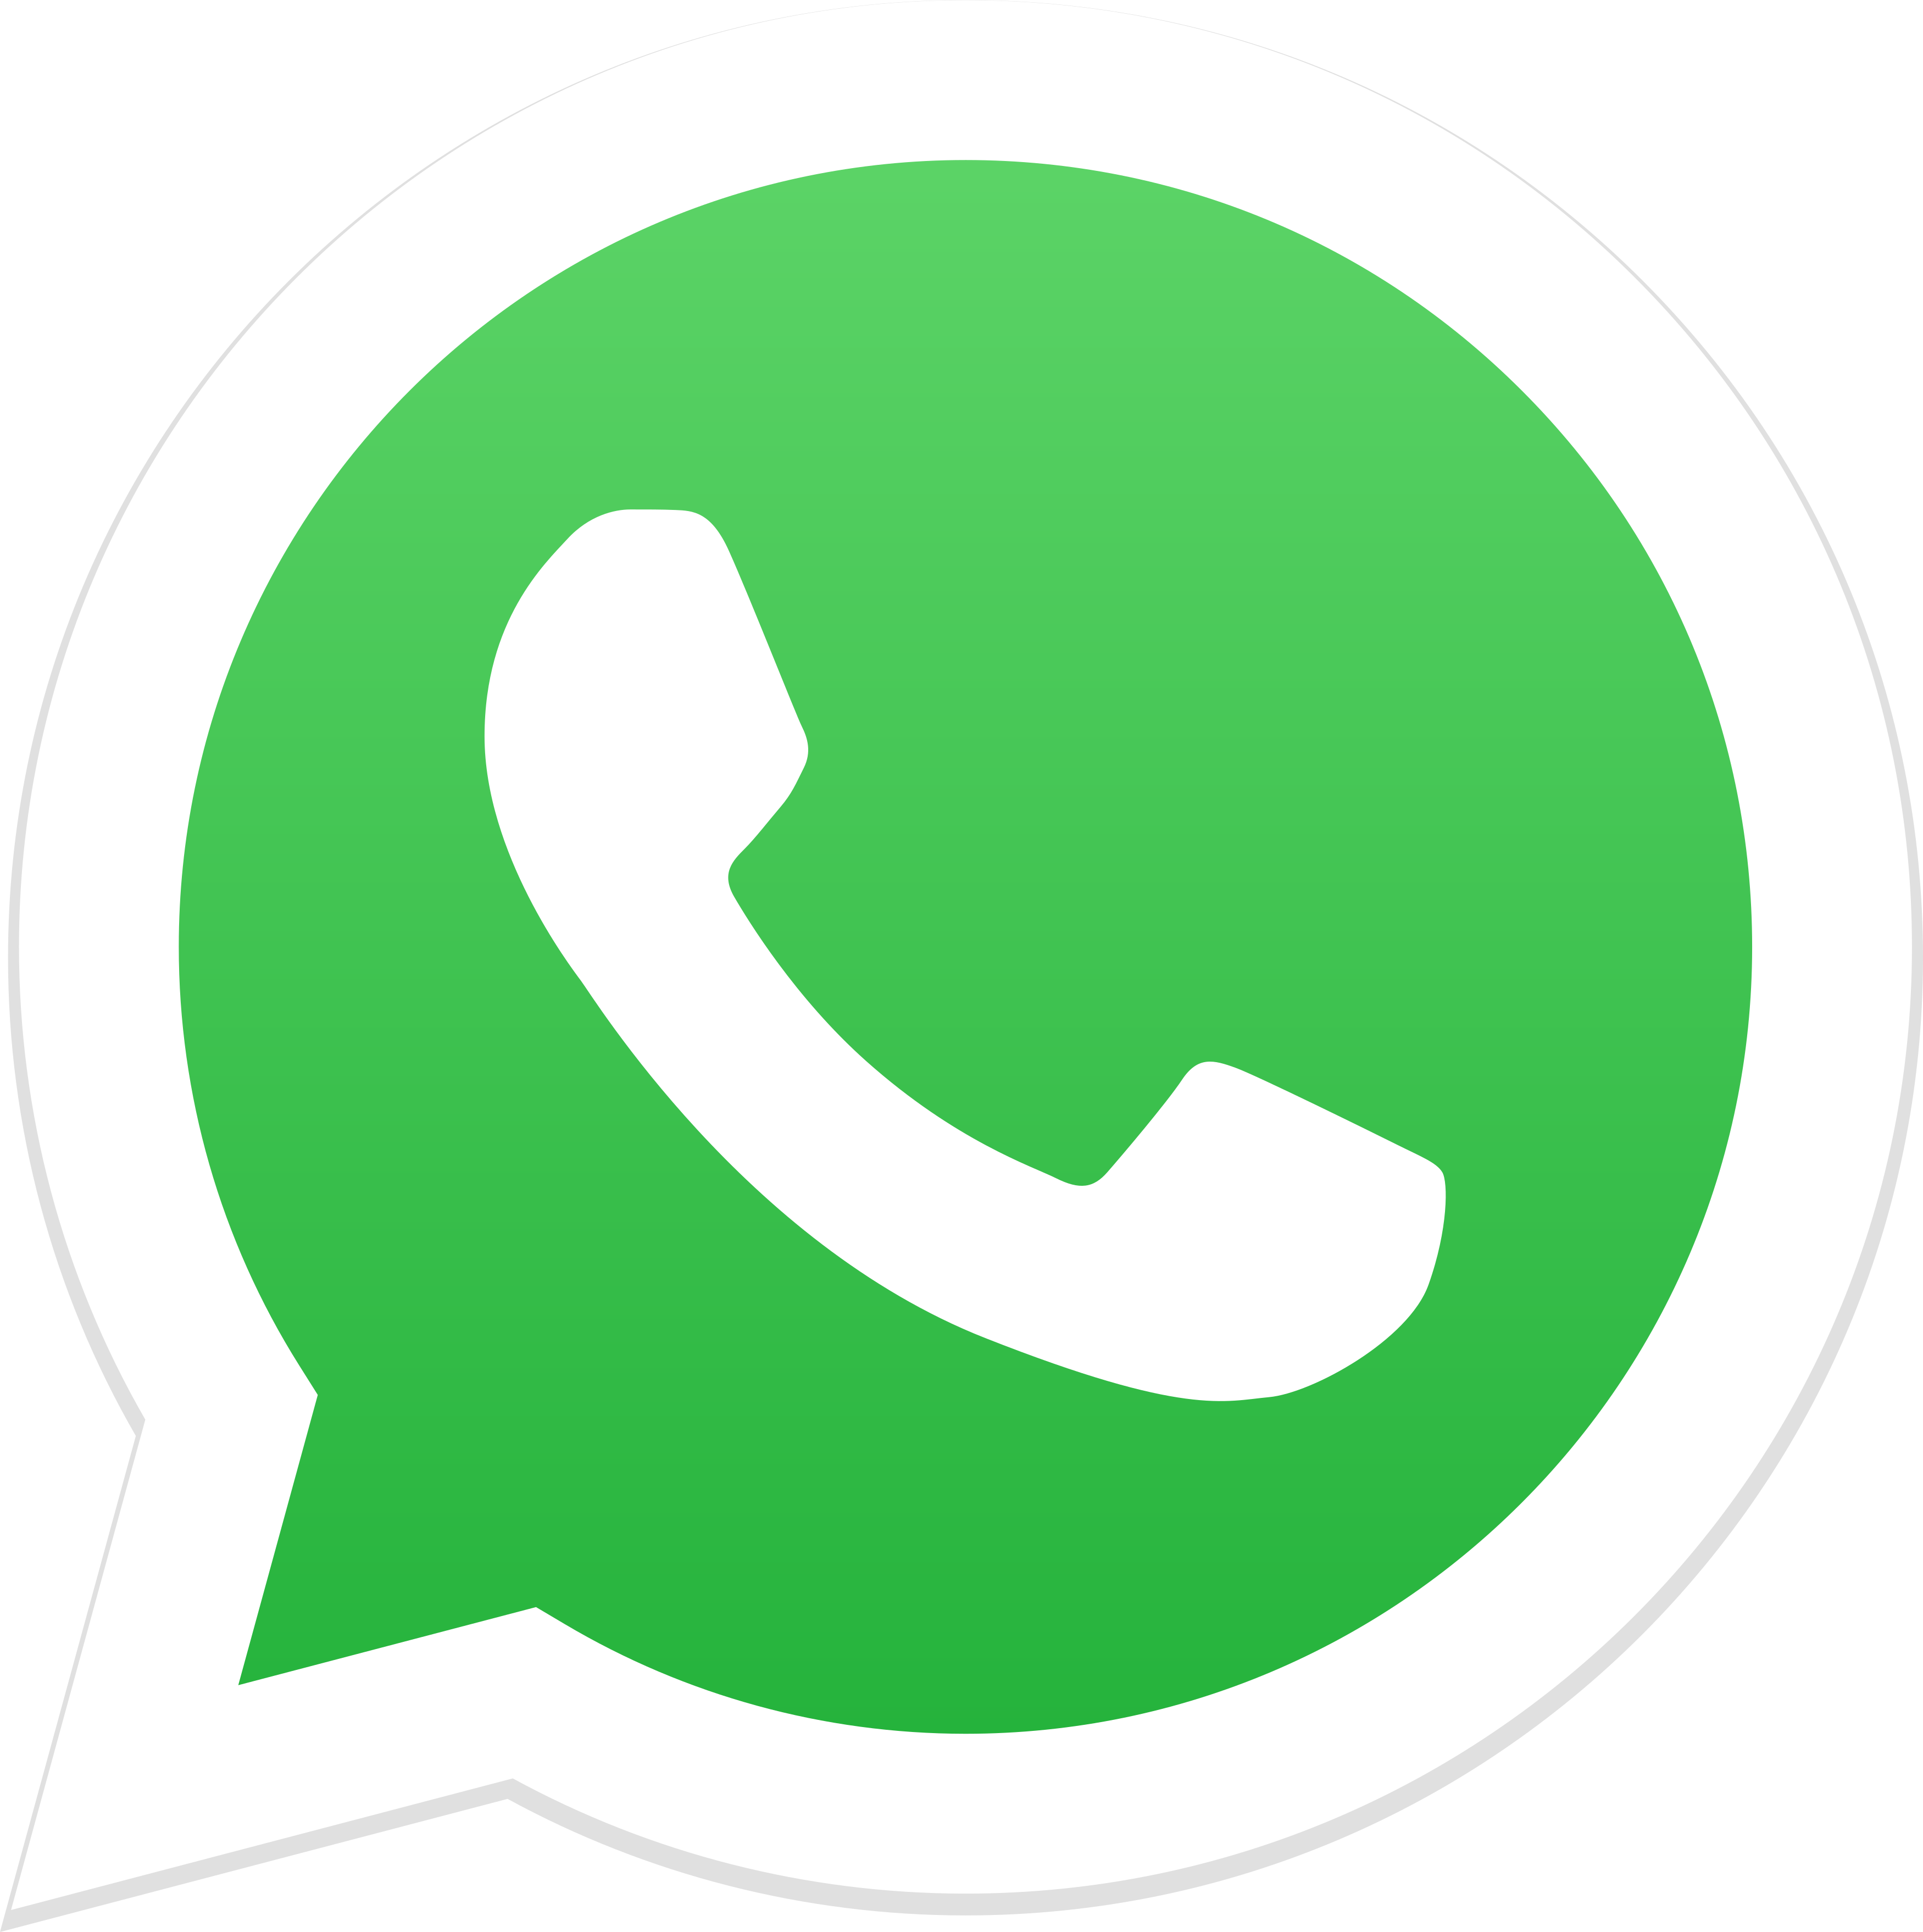 whatsapp logo 1 - AS 10  FLORES MAIS PERFUMADAS | CONFIRA NOSSA LISTA